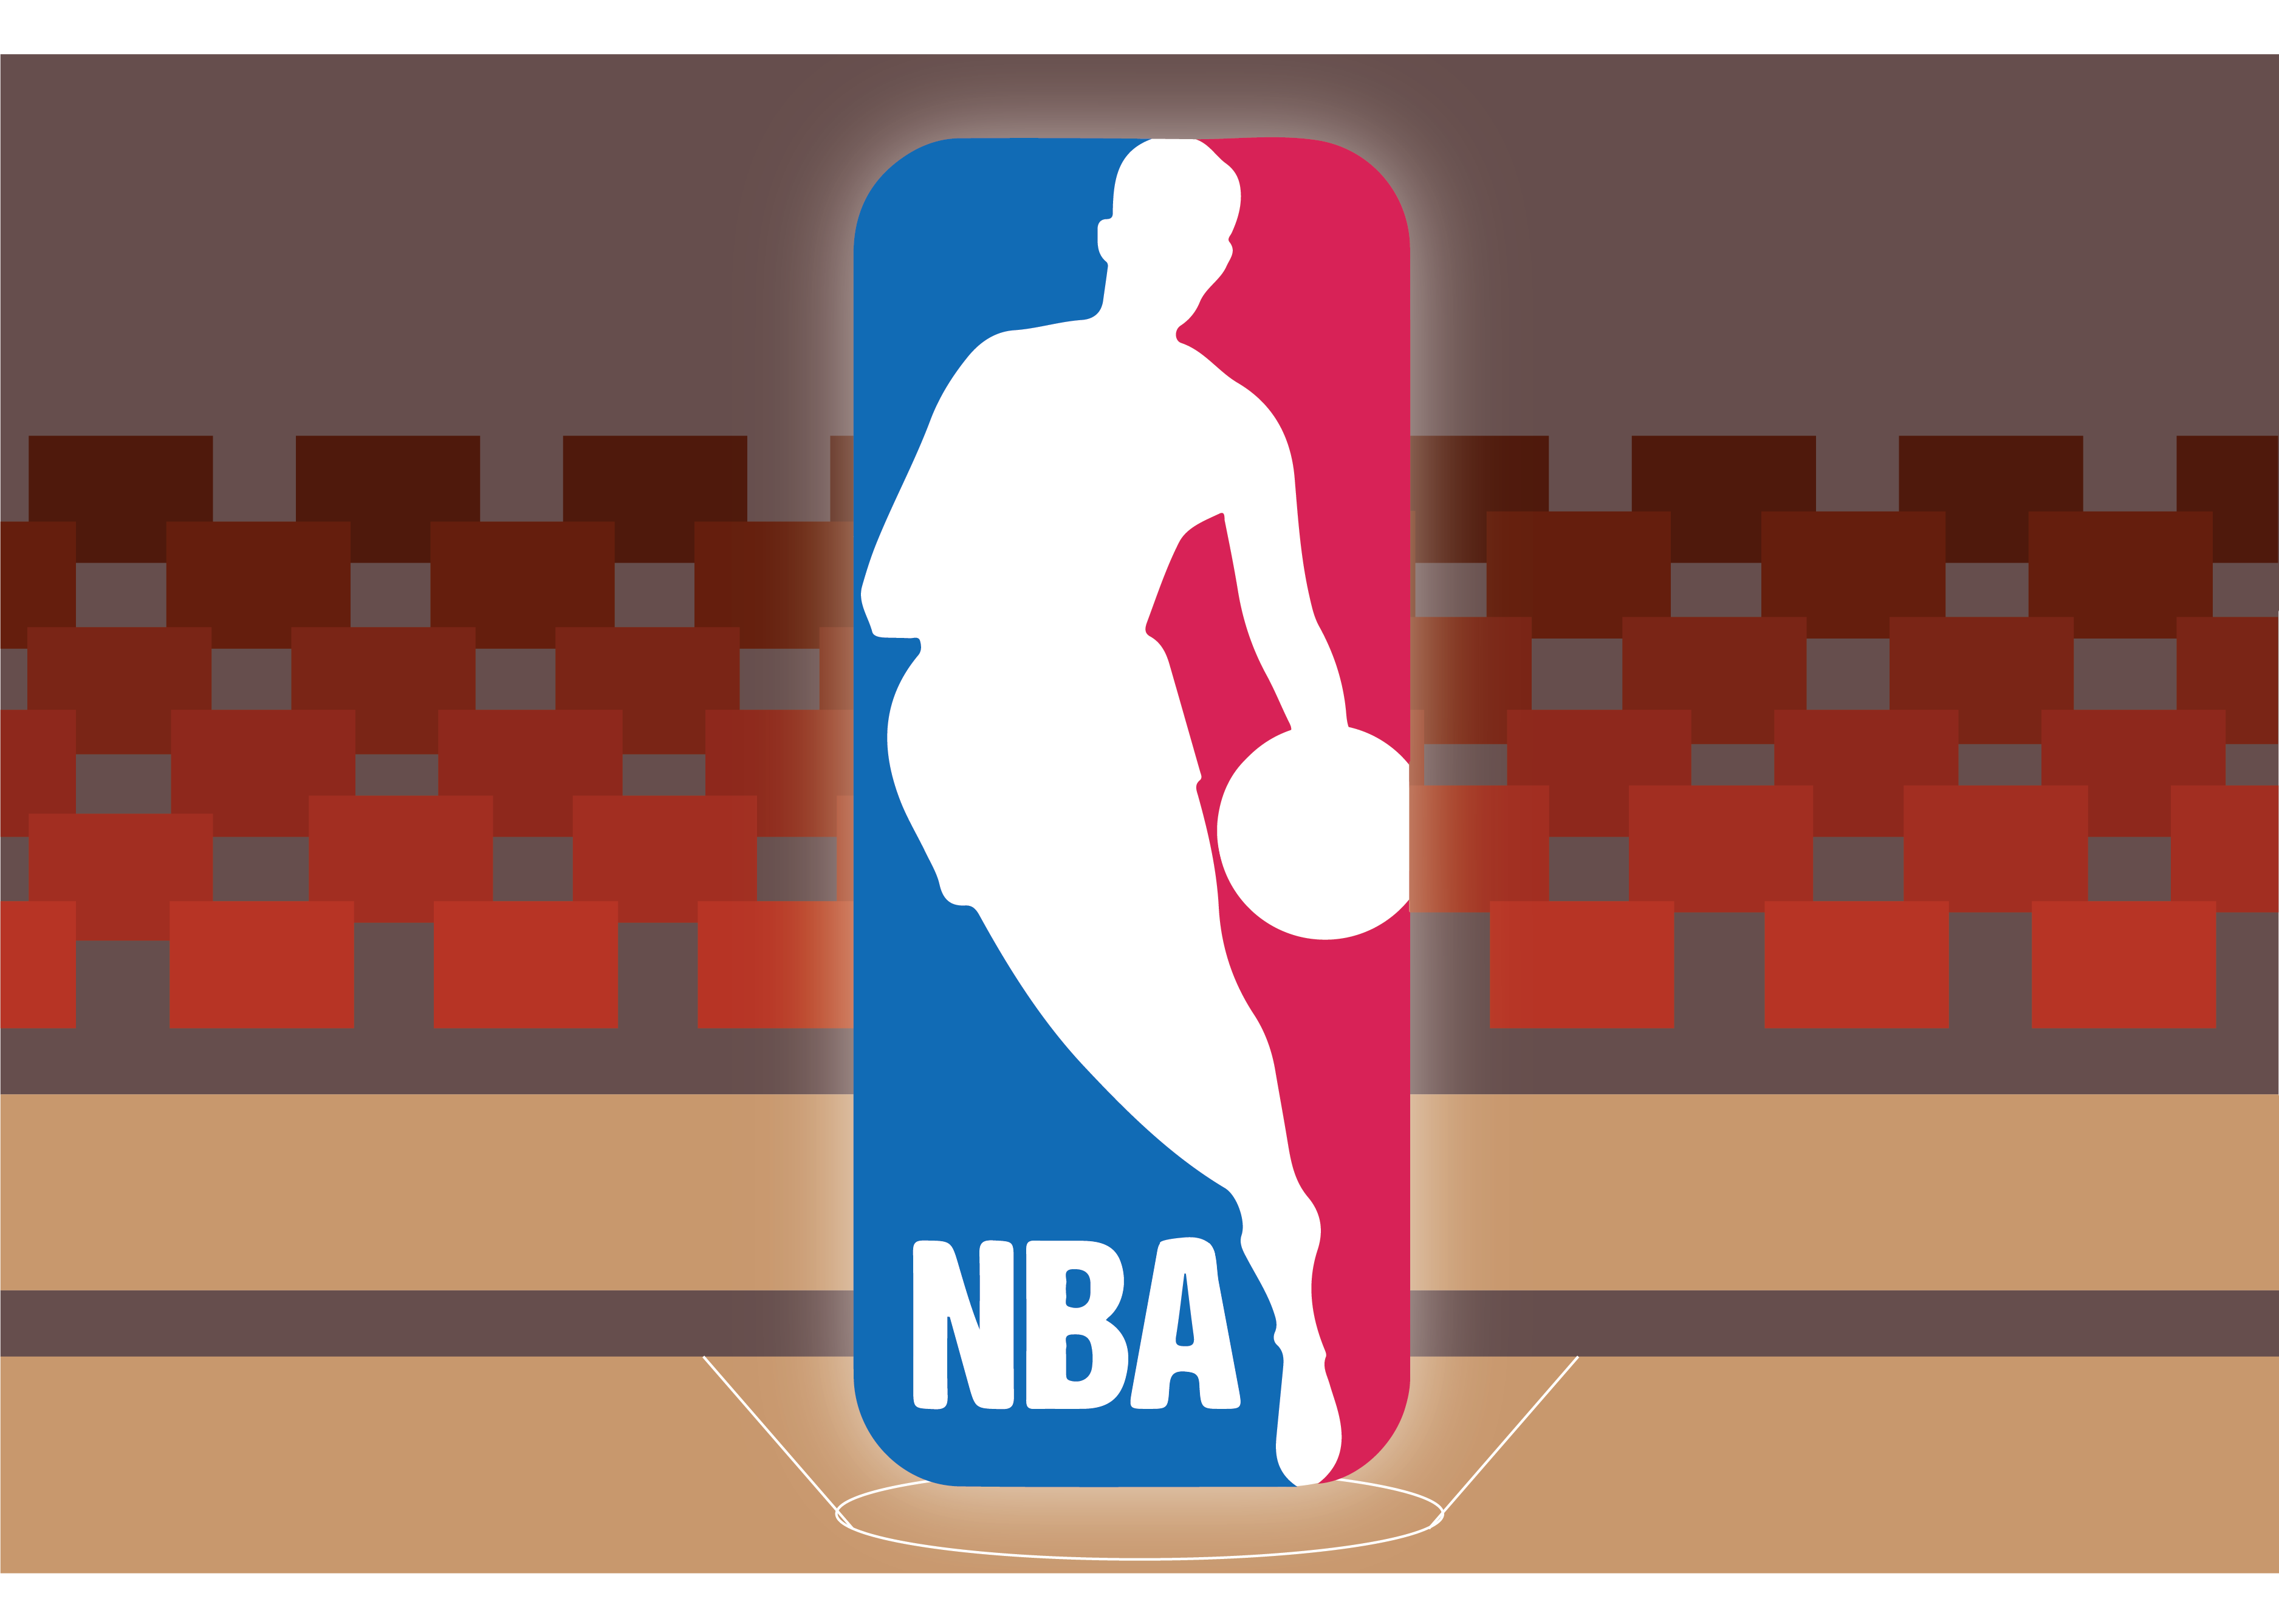 NBA logo in stadium